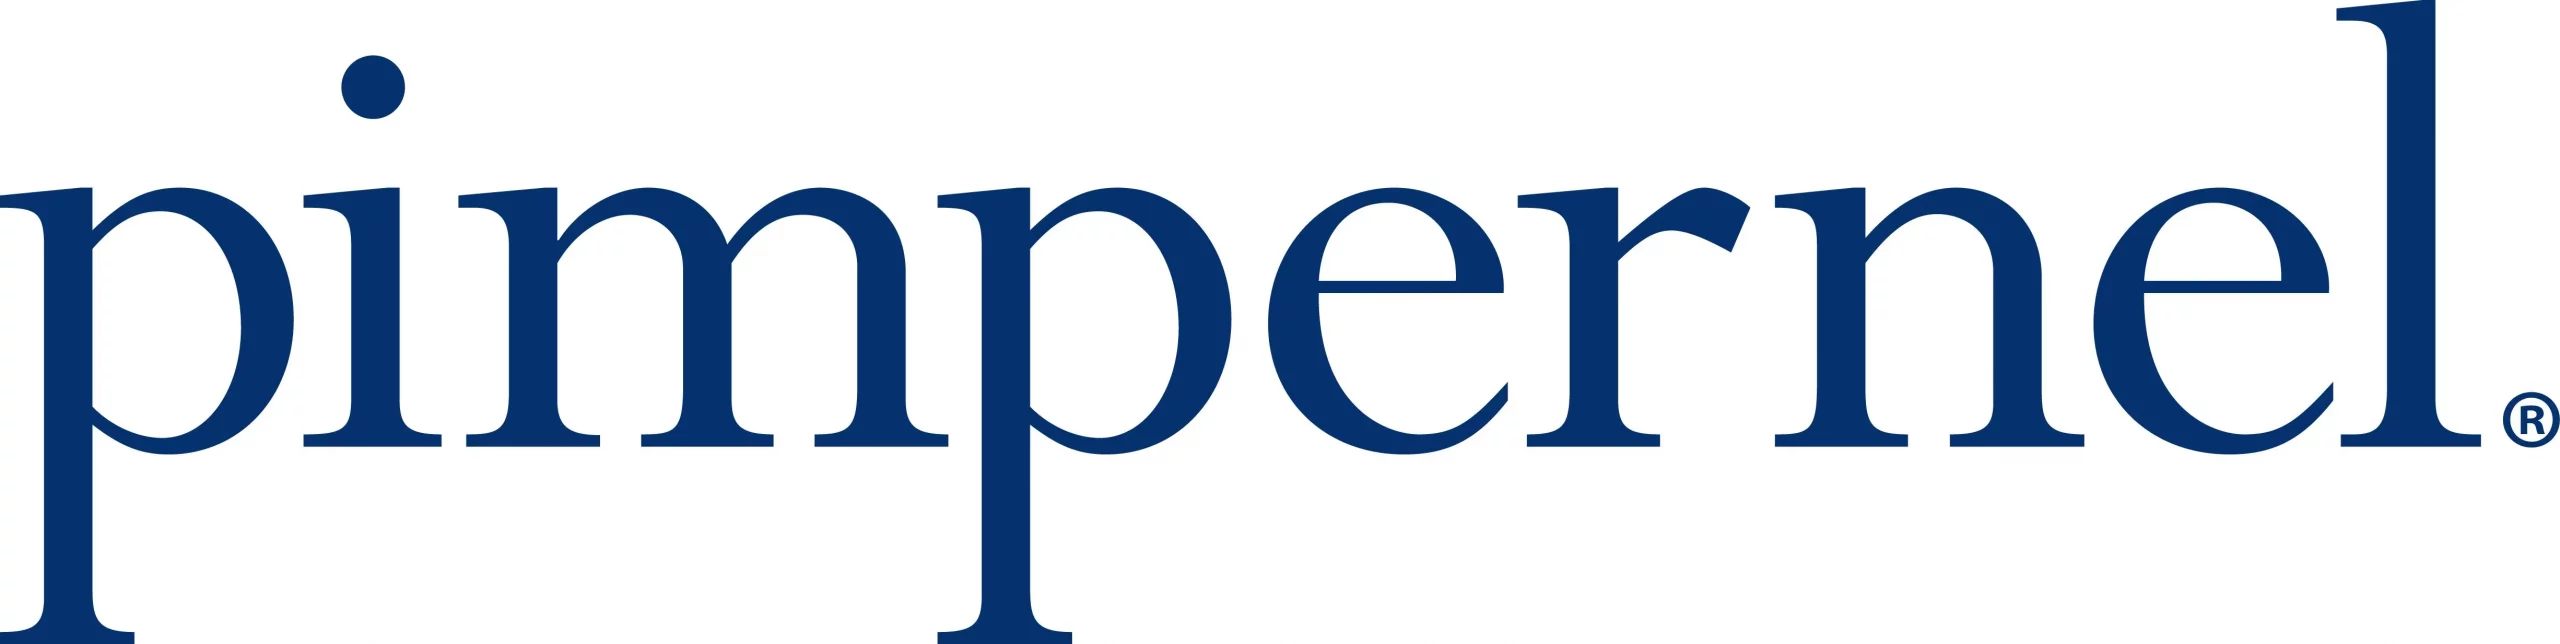 pimpernel-b510-logo